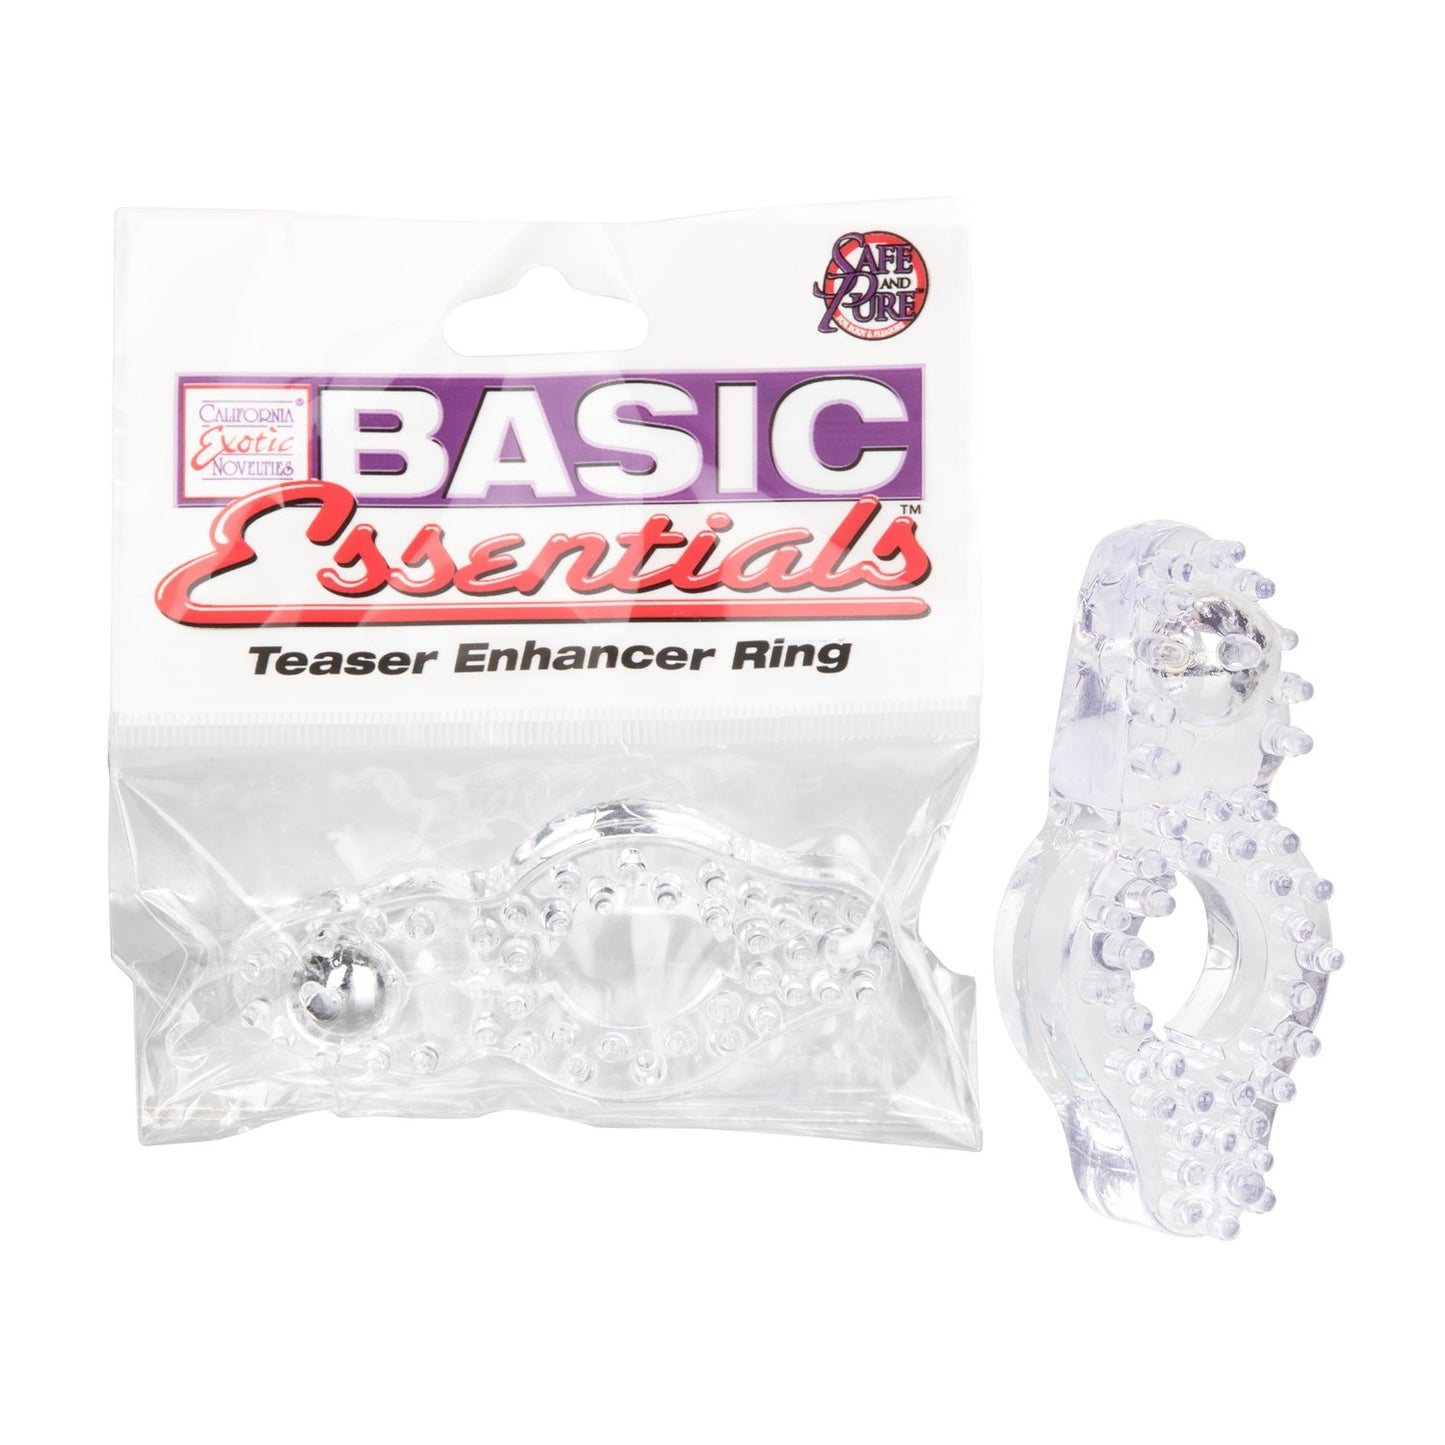 Basic Essentials Teaser Enhancer Ring